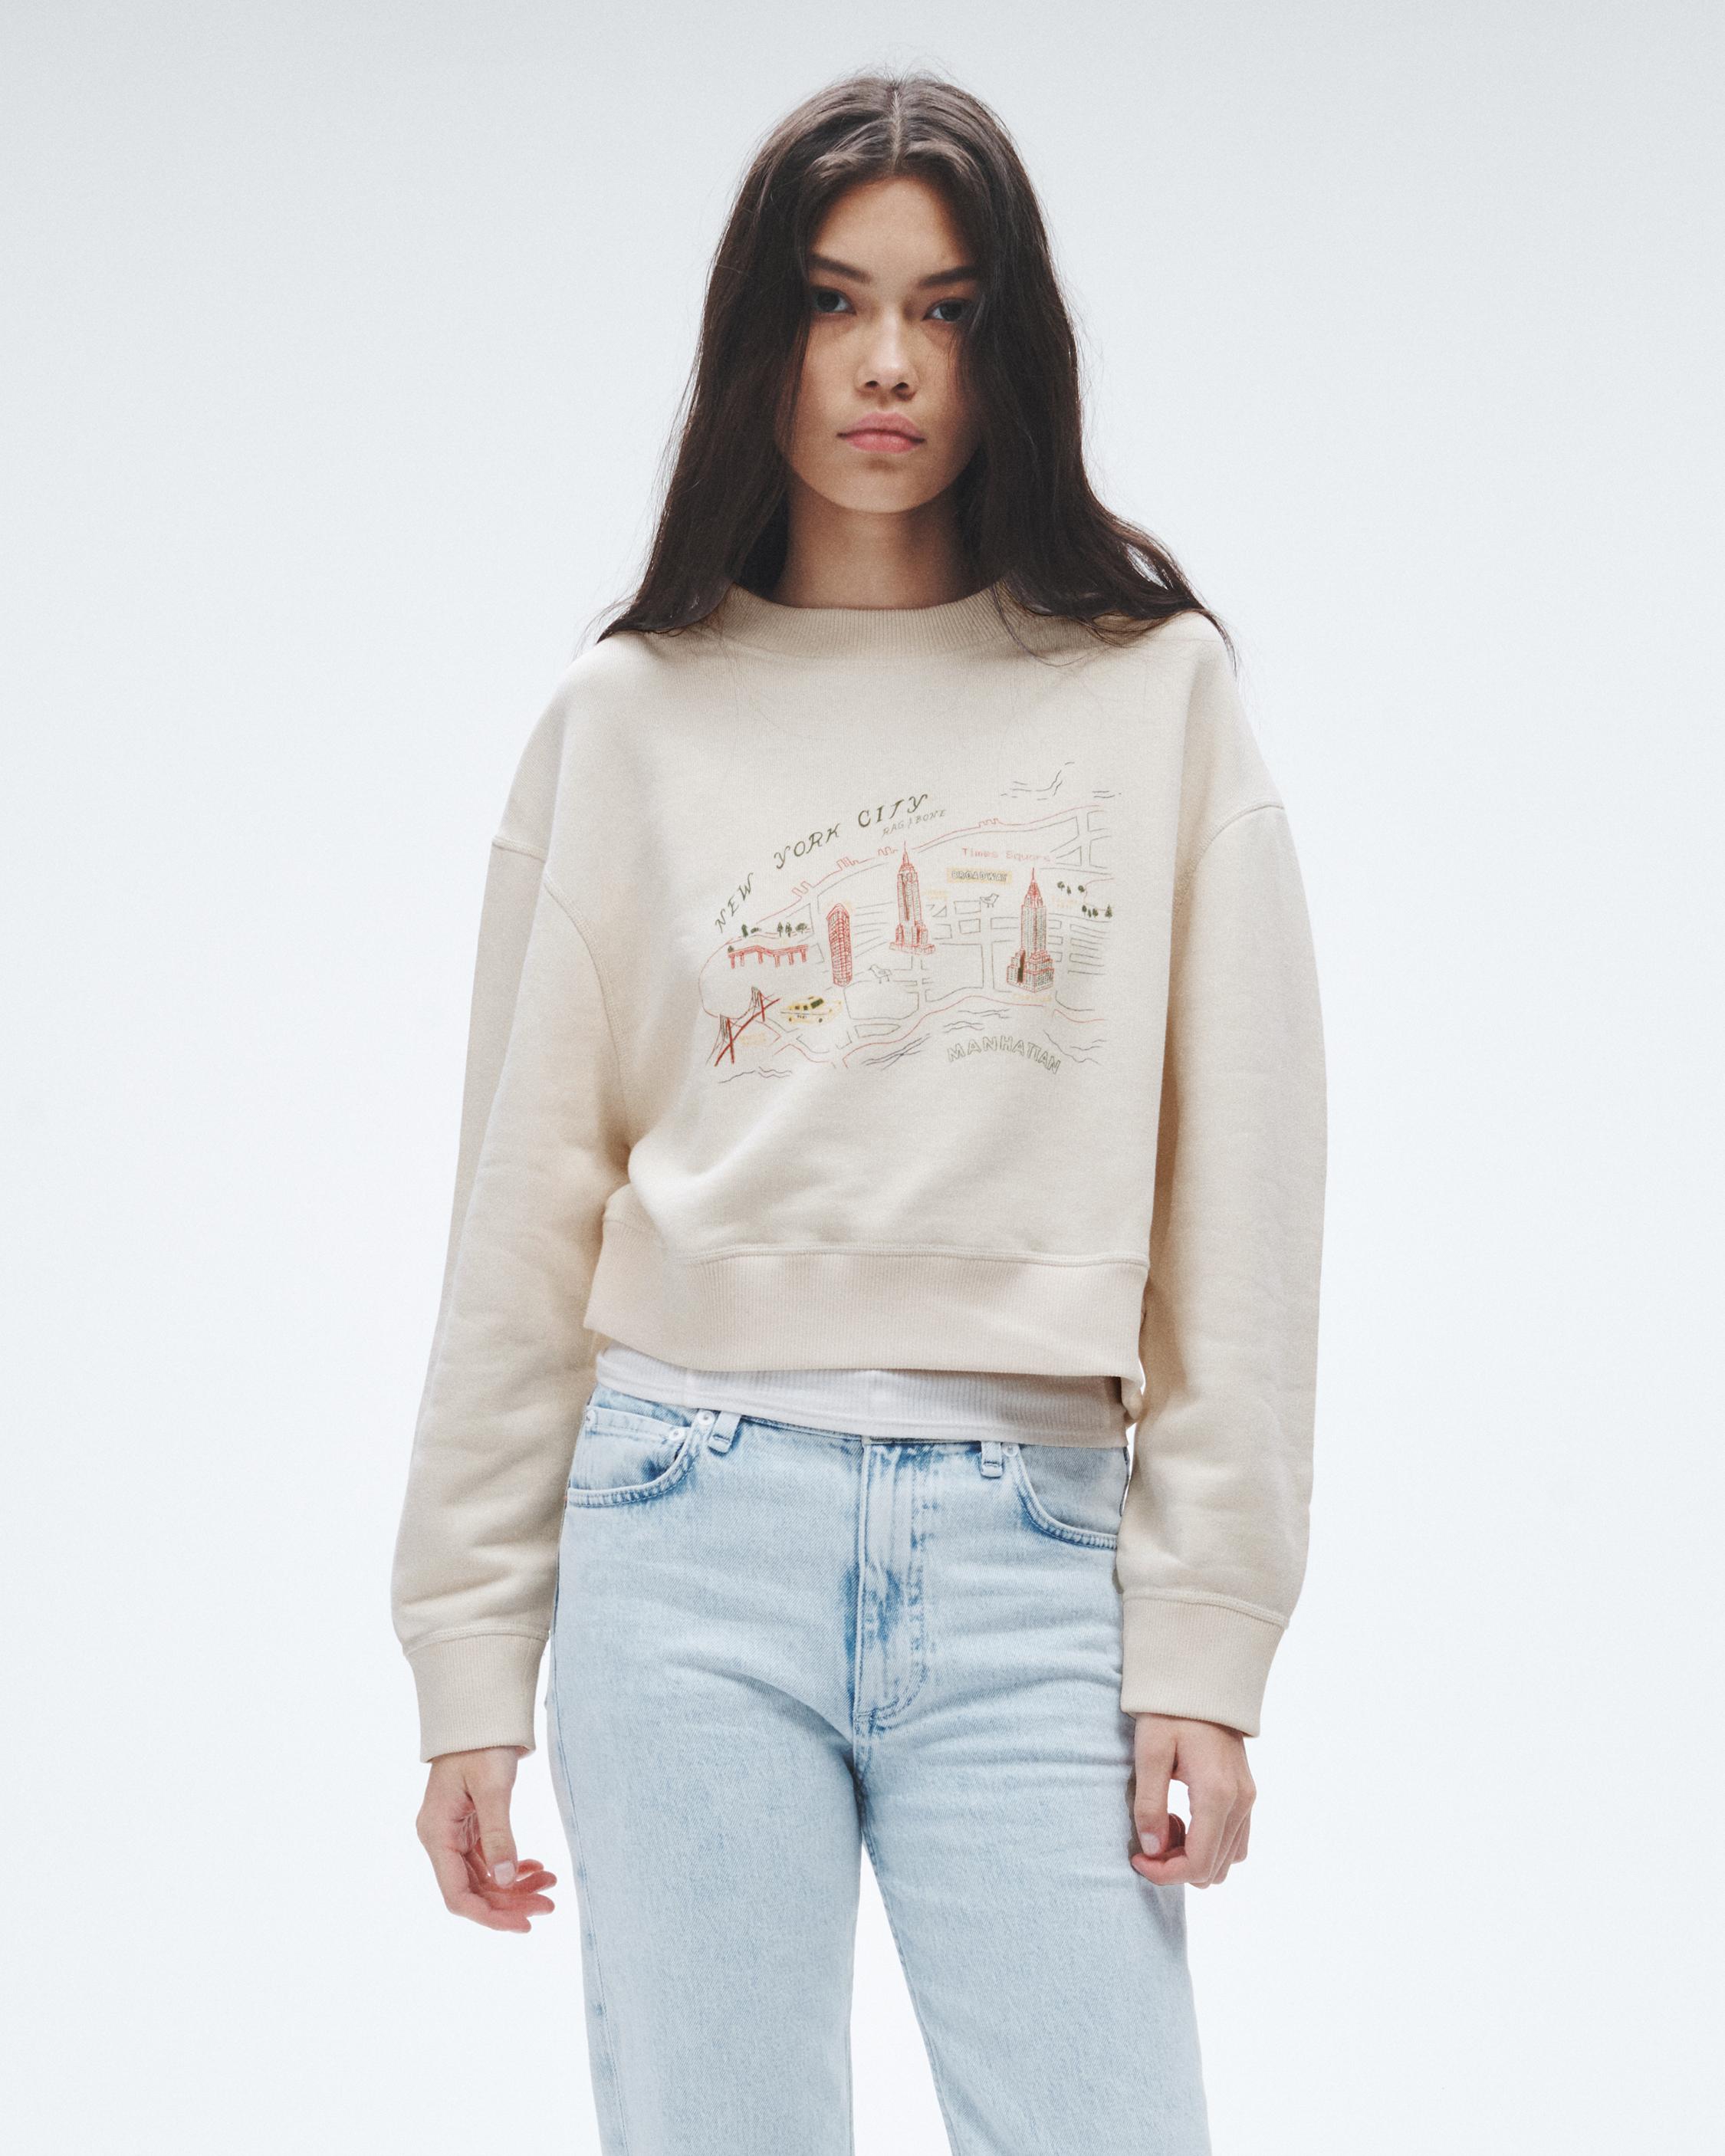 Sweatshirts, Hoodies & Pullovers for Women